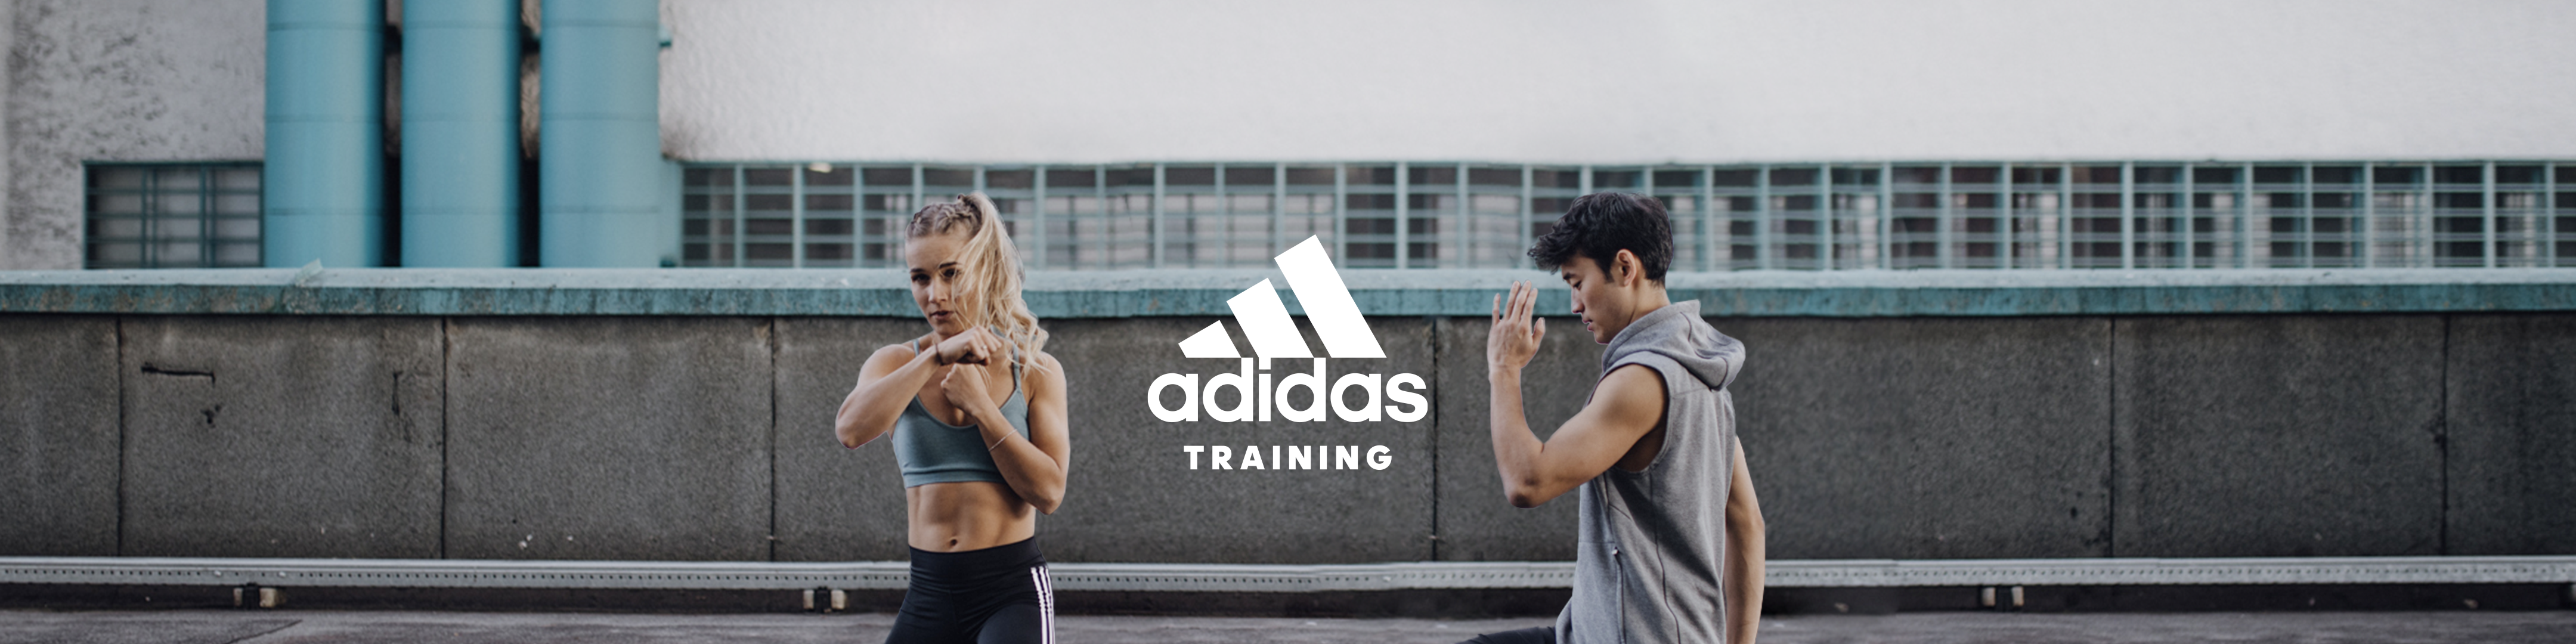 adidas runtastic training